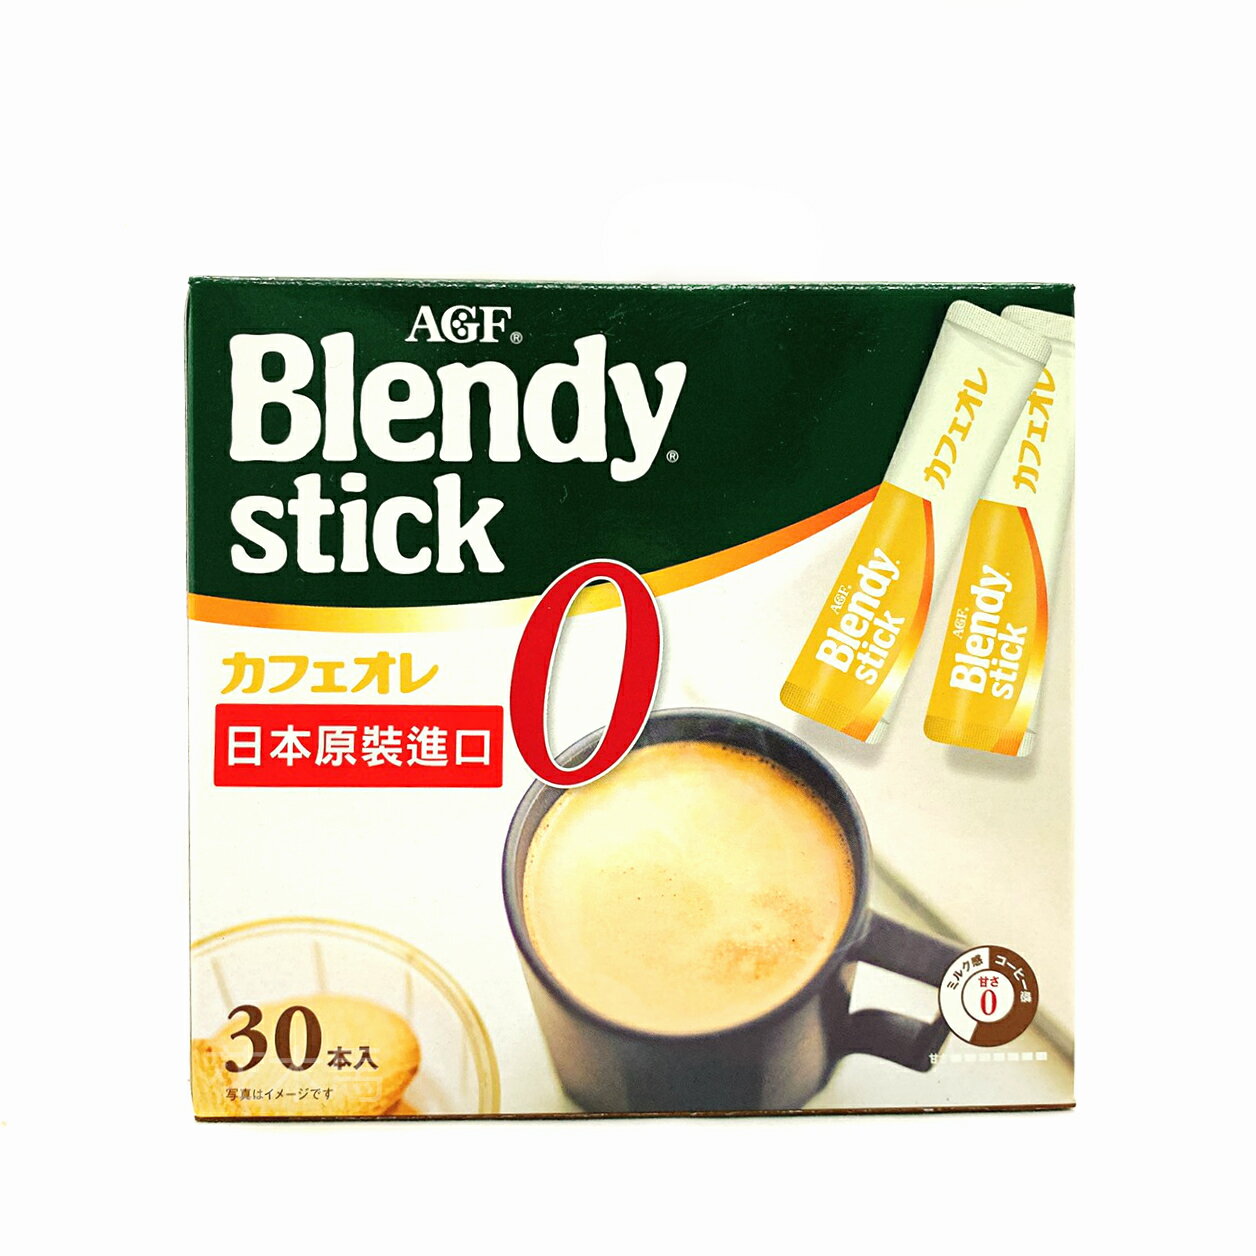 AGF Blendy三合一咖啡 原味歐蕾 無糖咖啡 低咖啡因咖啡 紅茶歐蕾 義式濃縮 低卡歐蕾